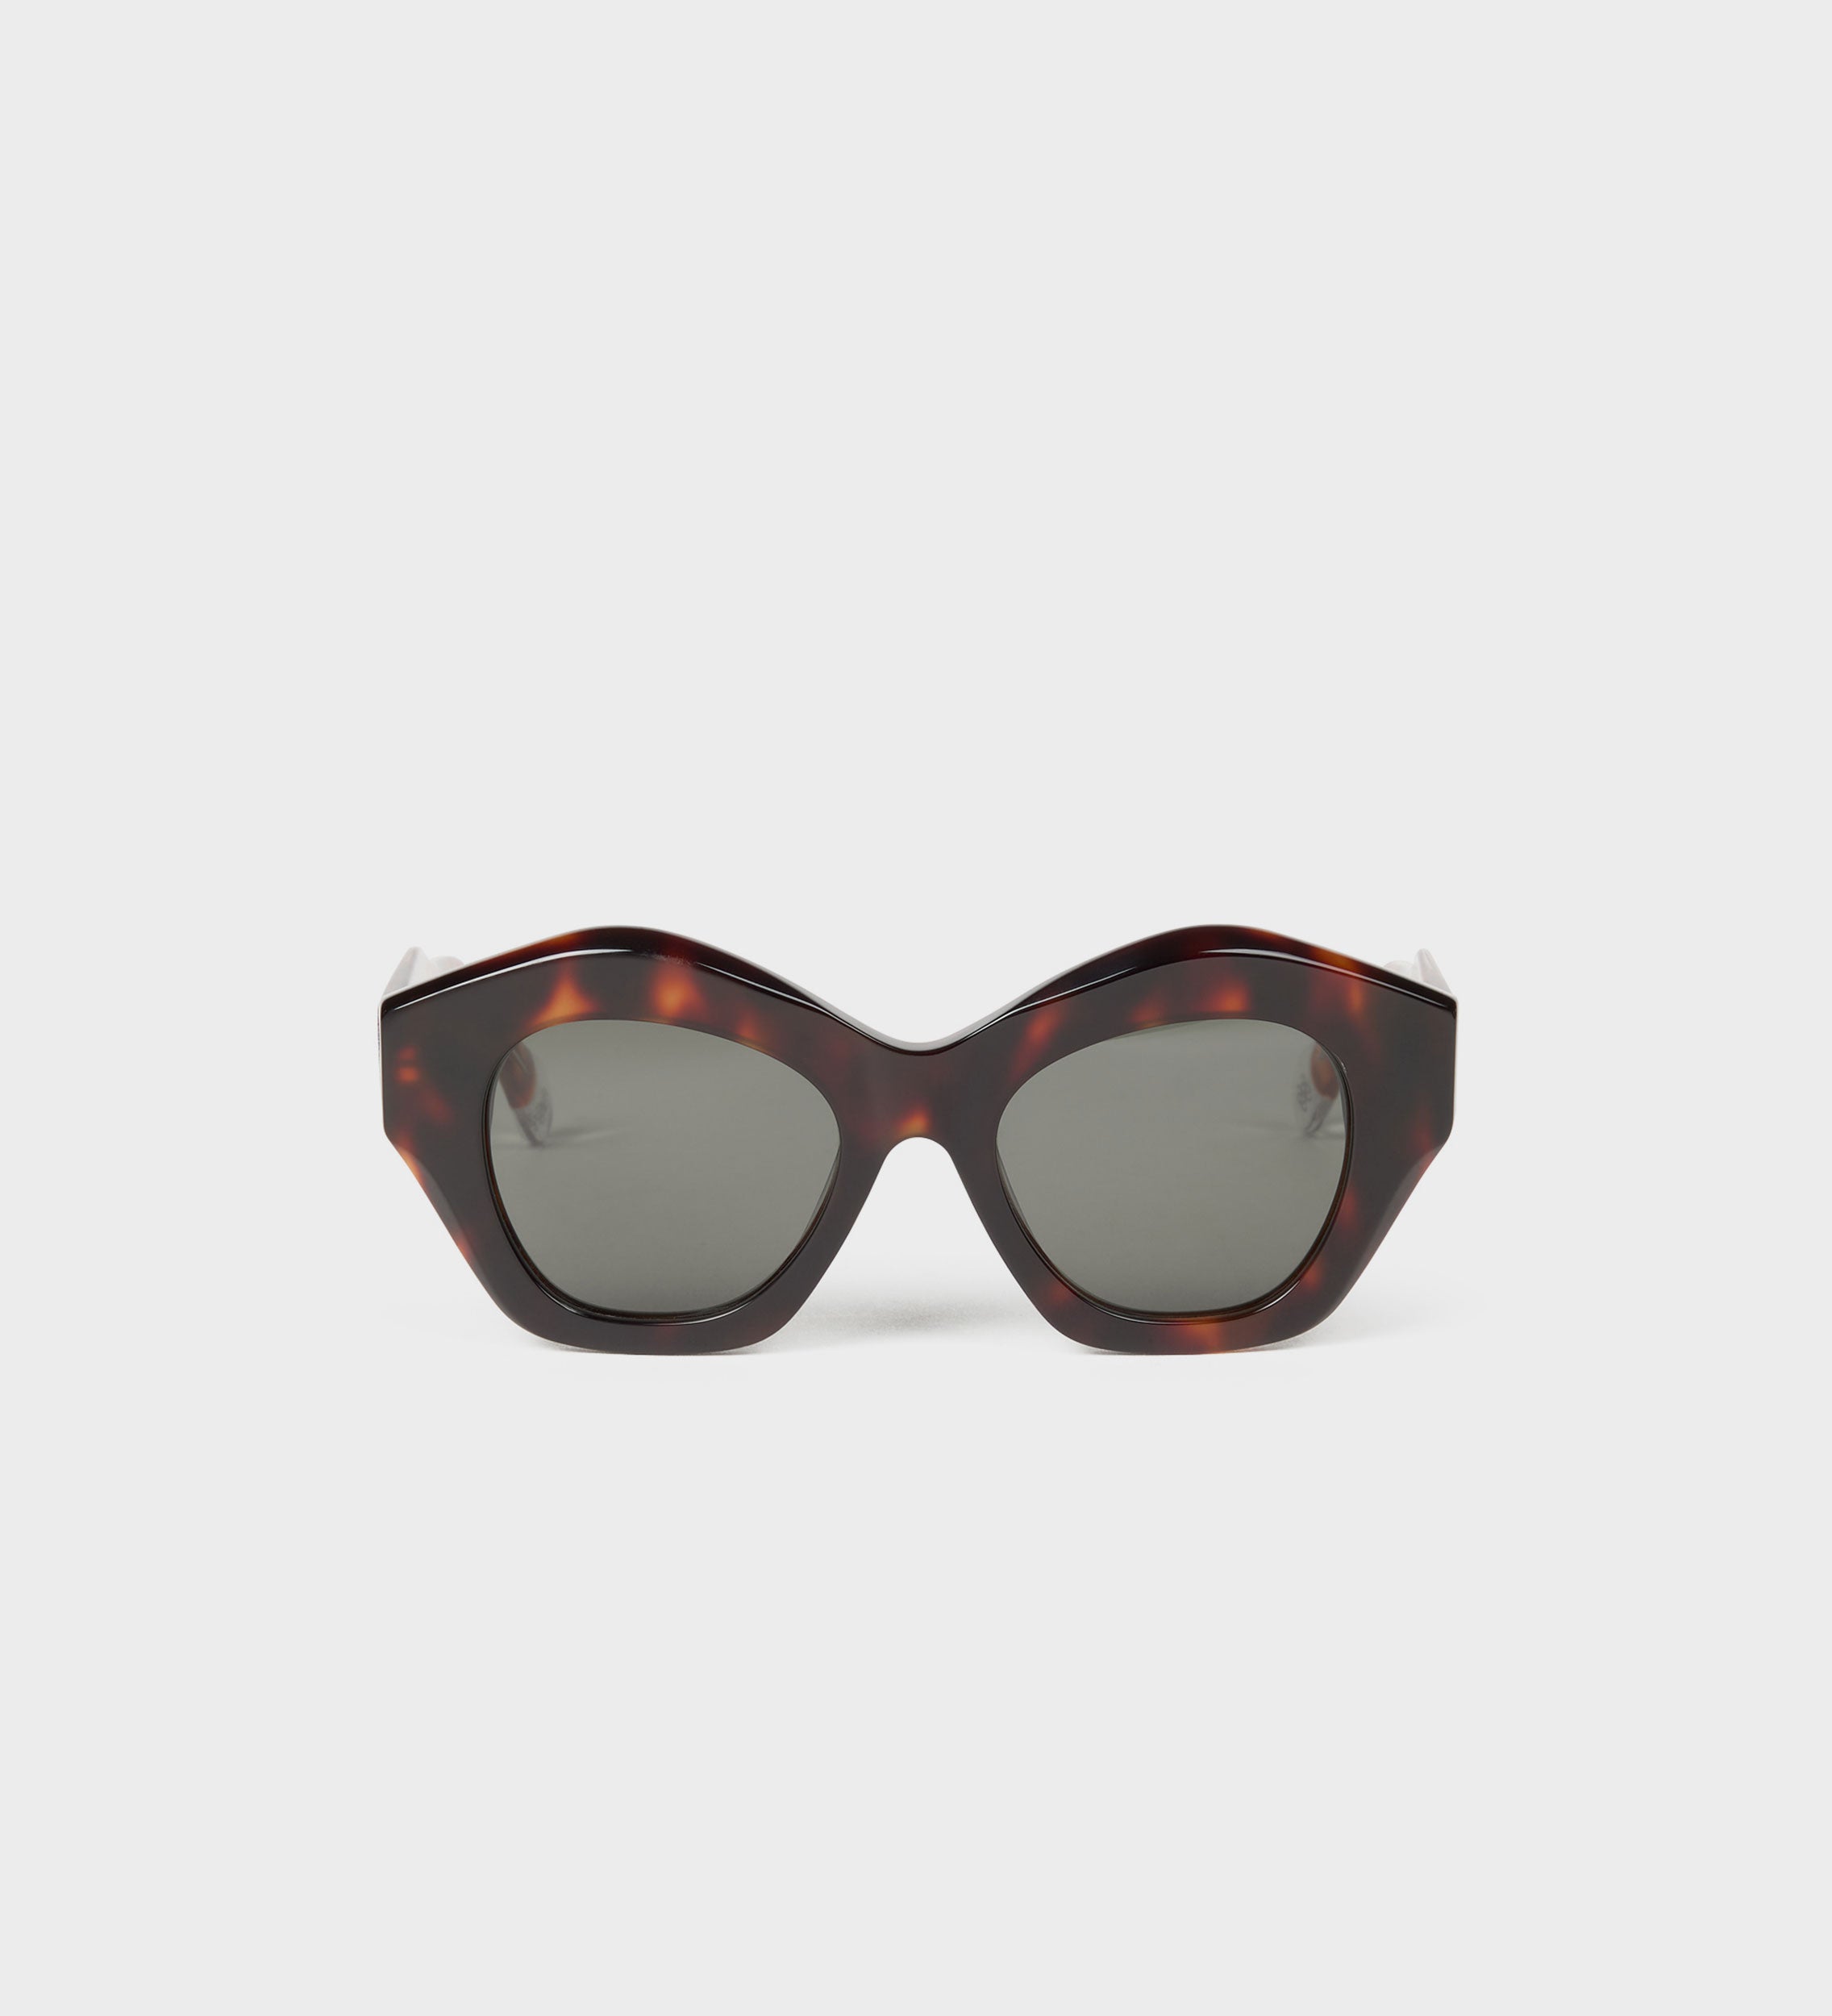 Oversized oval sunglasses